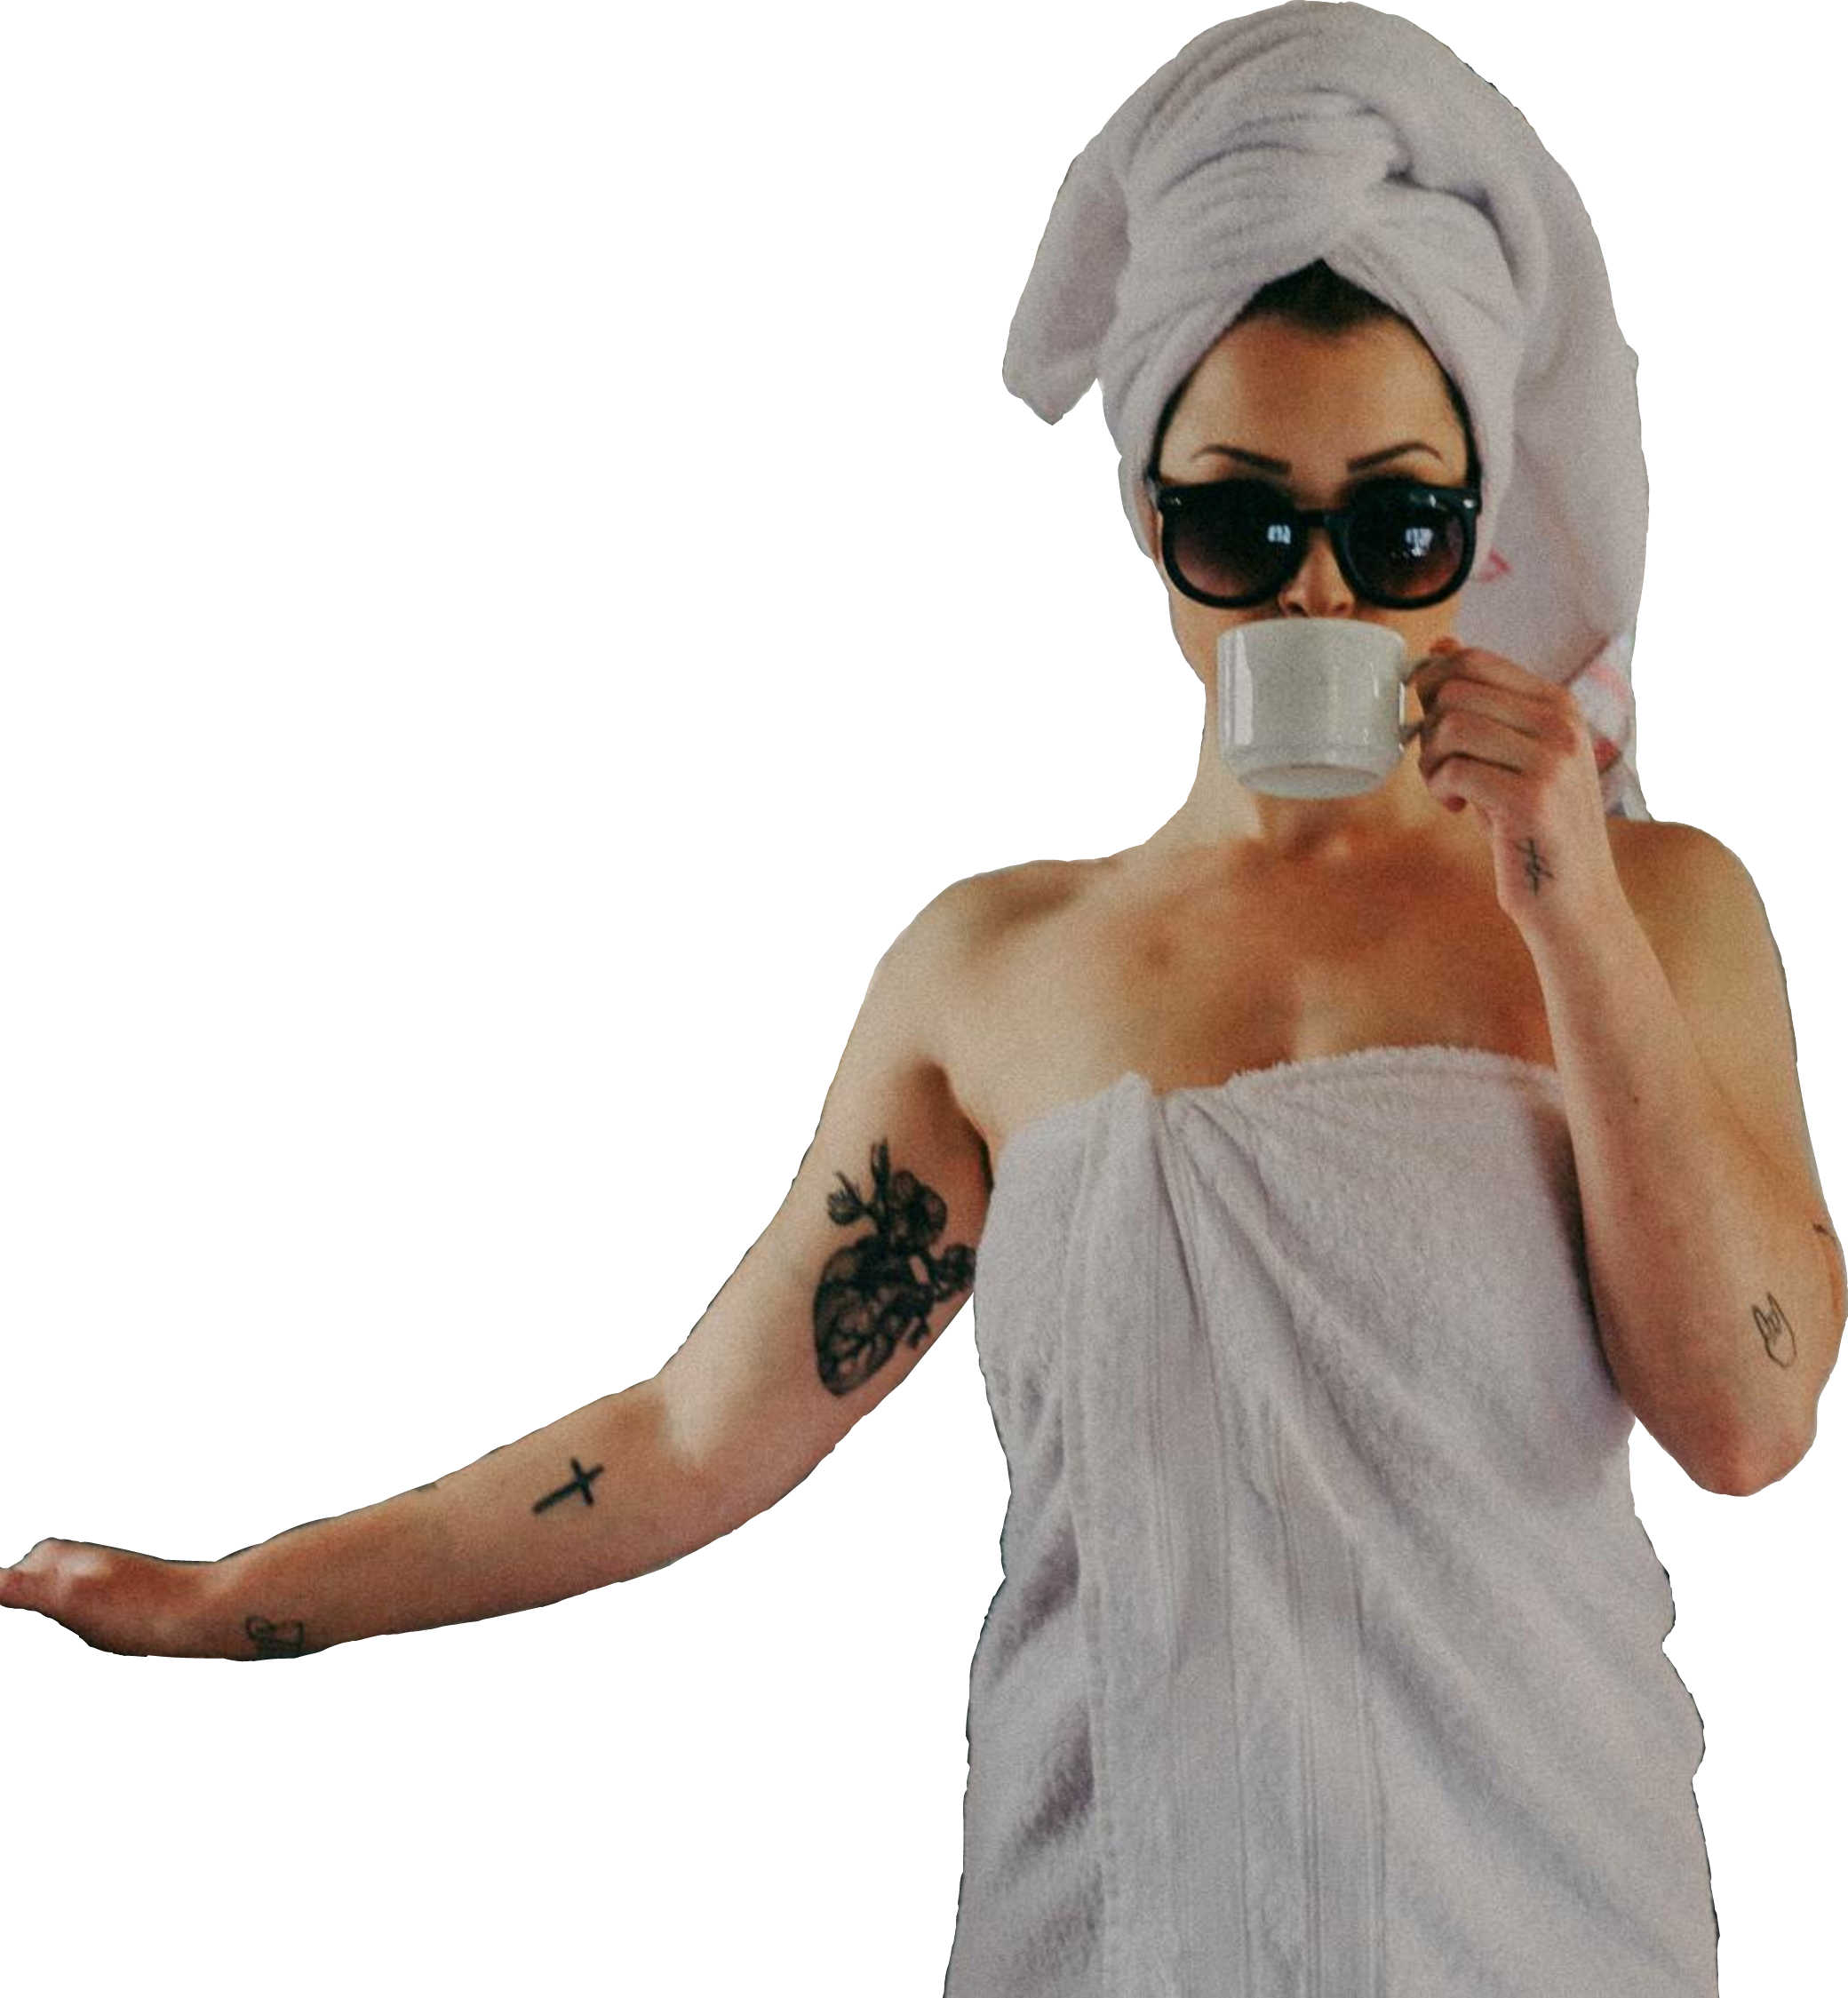 Girl Towel Bath Art Freetoedit Sticker By Pix Pics